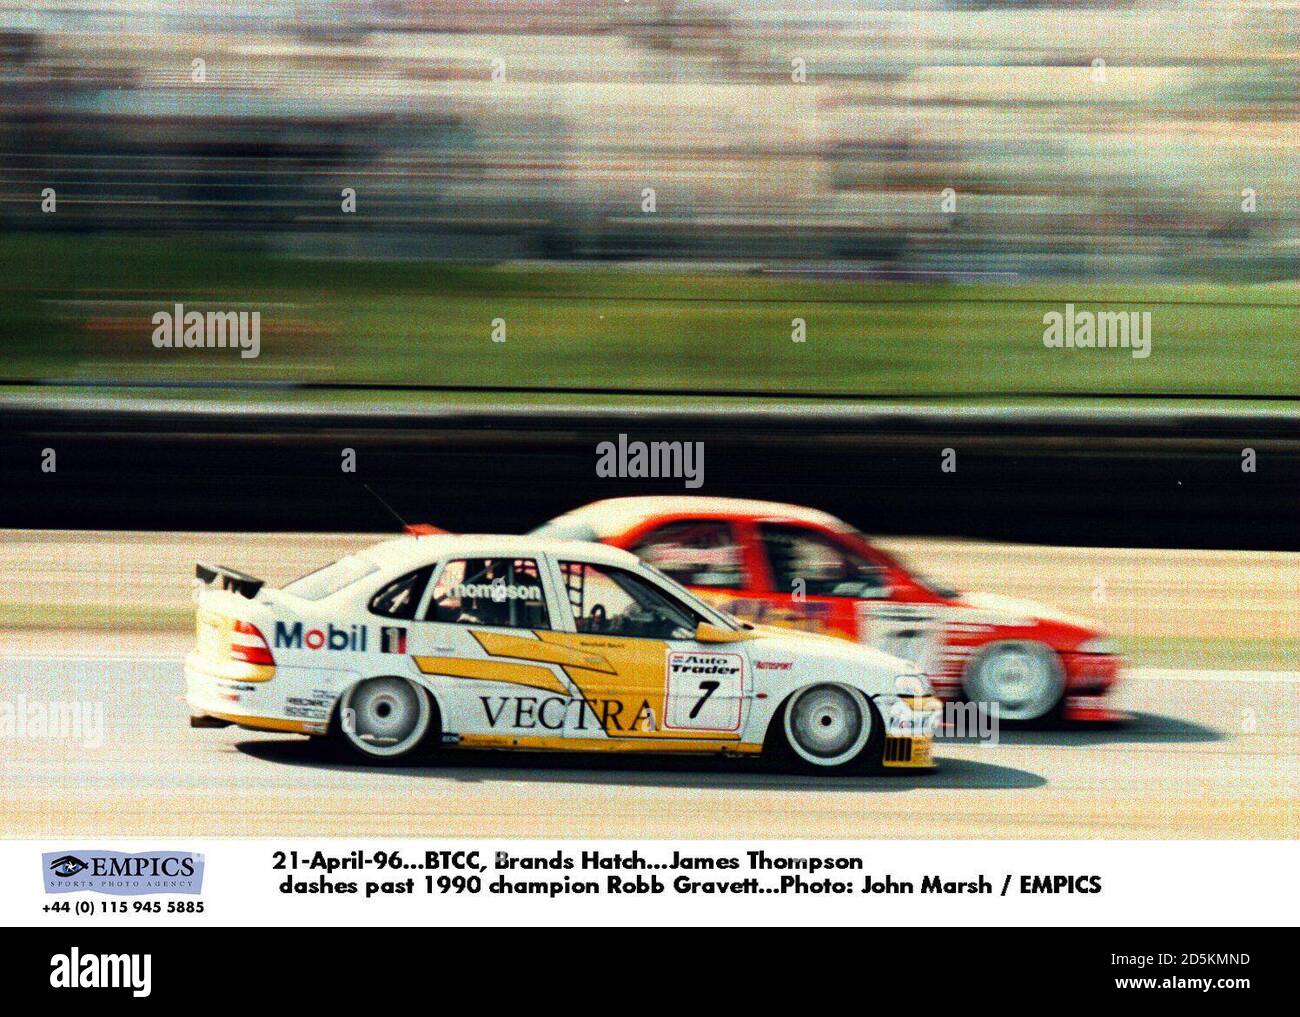 21-April-96. BTCC, Brands Hatch. James Thompson dashes past 1990 champion Robb Gravett Stock Photo